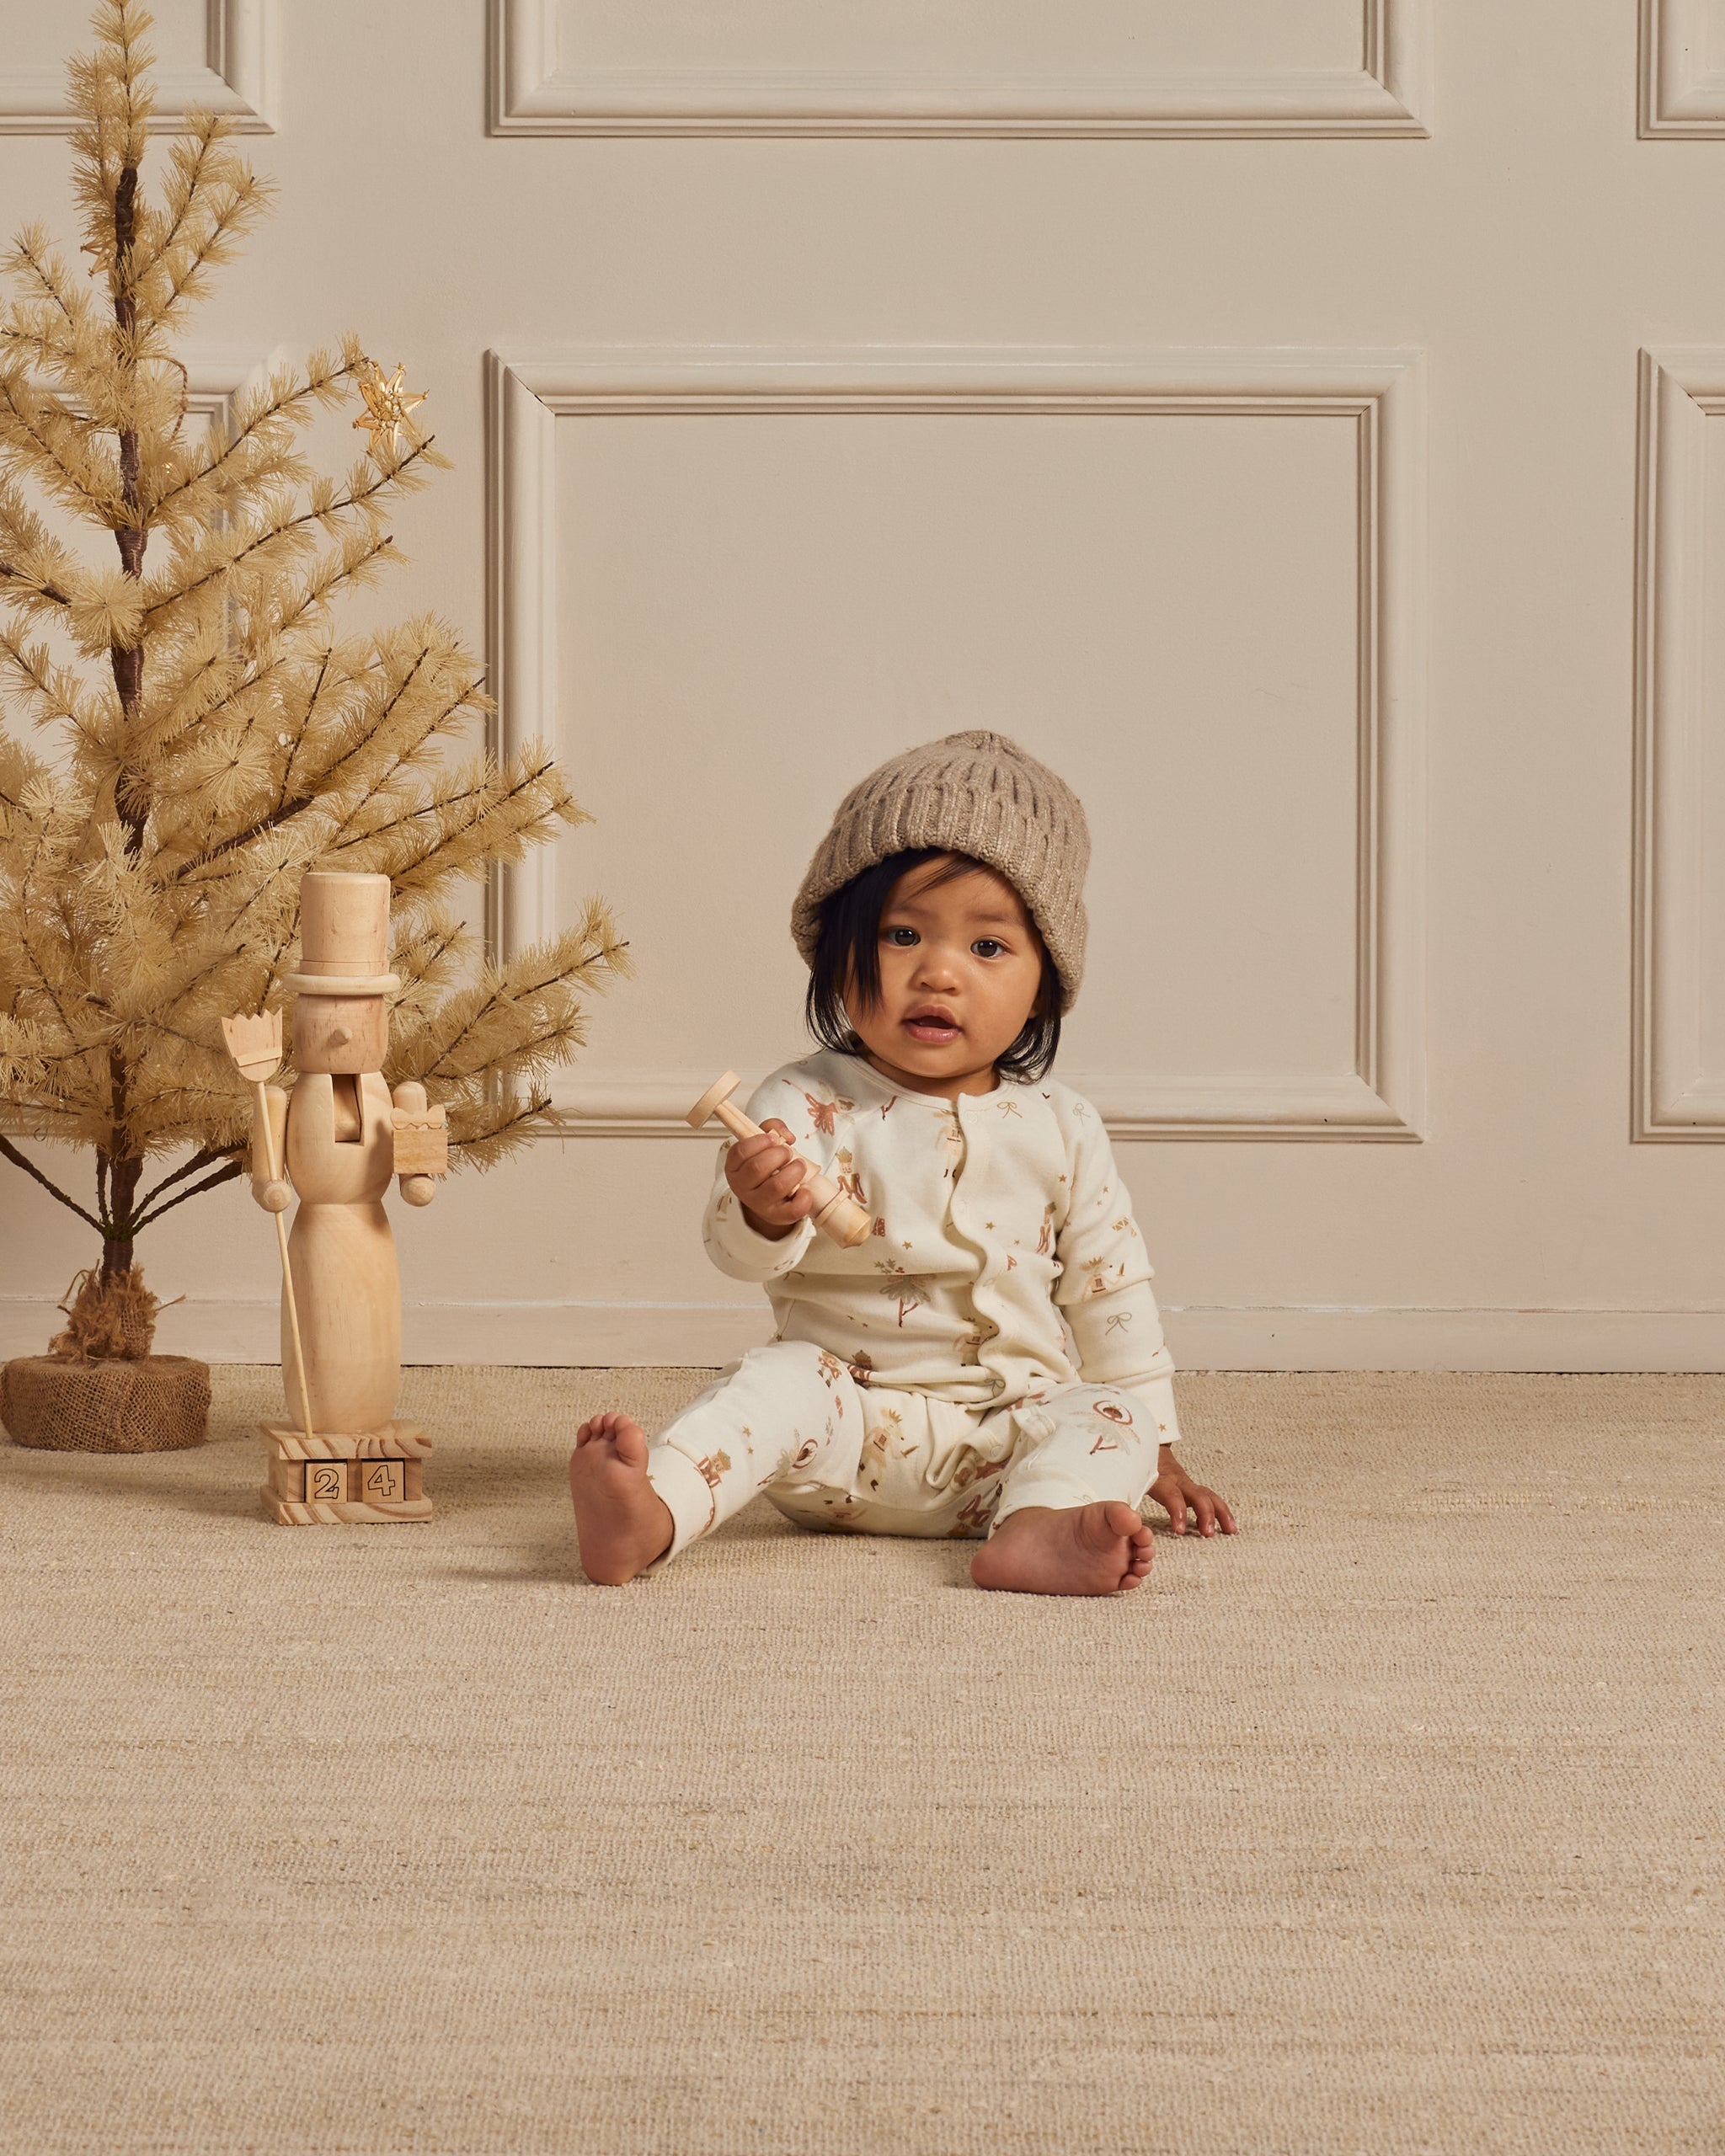 Organic Pajama Long John || Nutcracker - Rylee + Cru | Kids Clothes | Trendy Baby Clothes | Modern Infant Outfits |